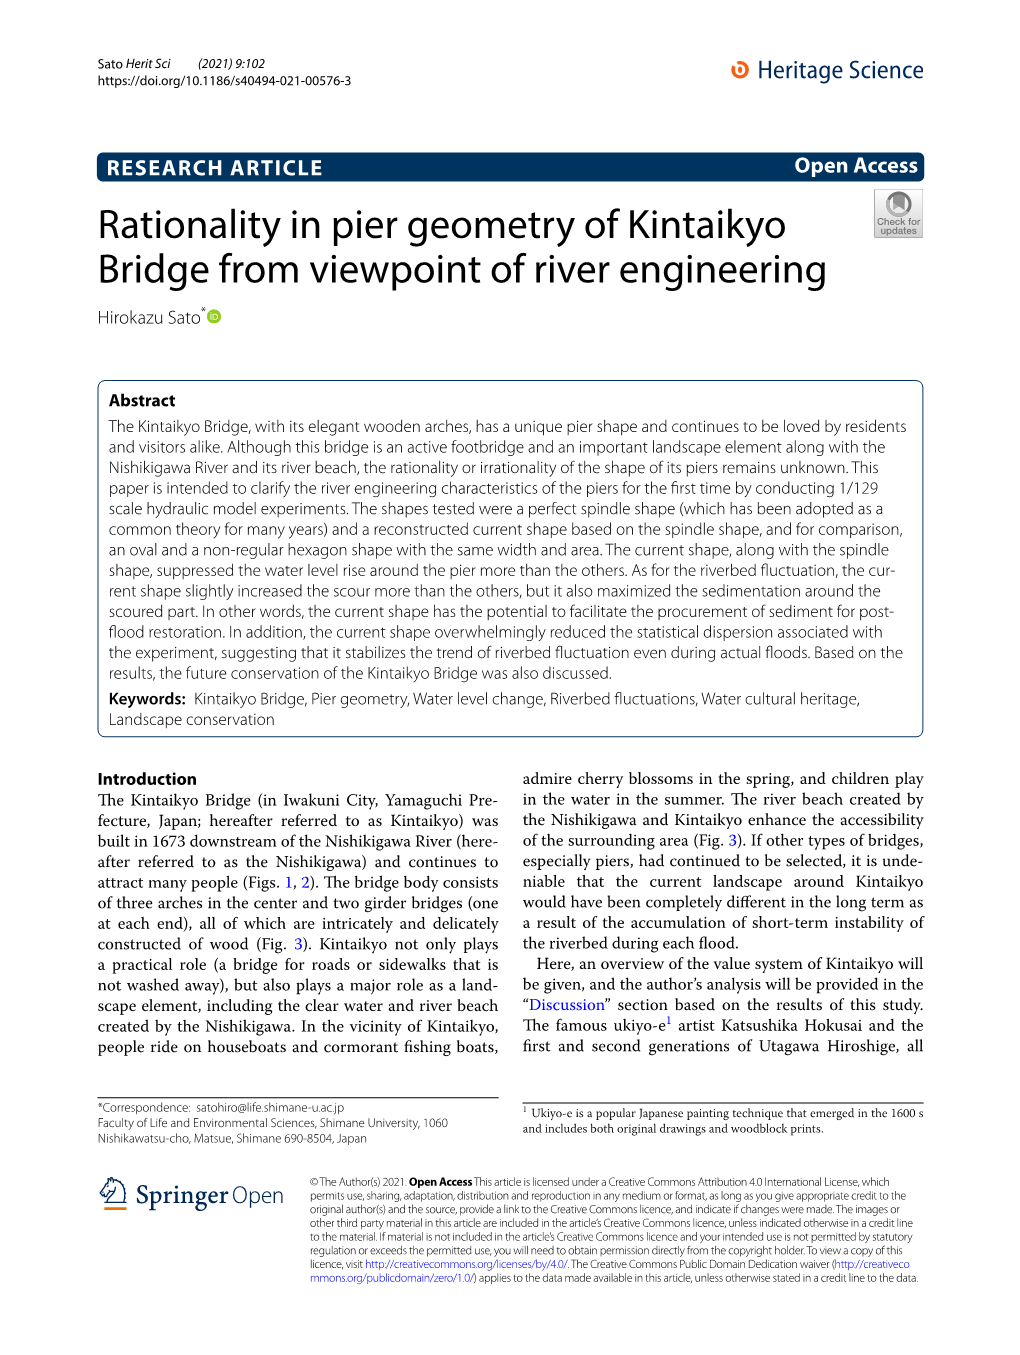 Rationality in Pier Geometry of Kintaikyo Bridge from Viewpoint of River Engineering Hirokazu Sato*